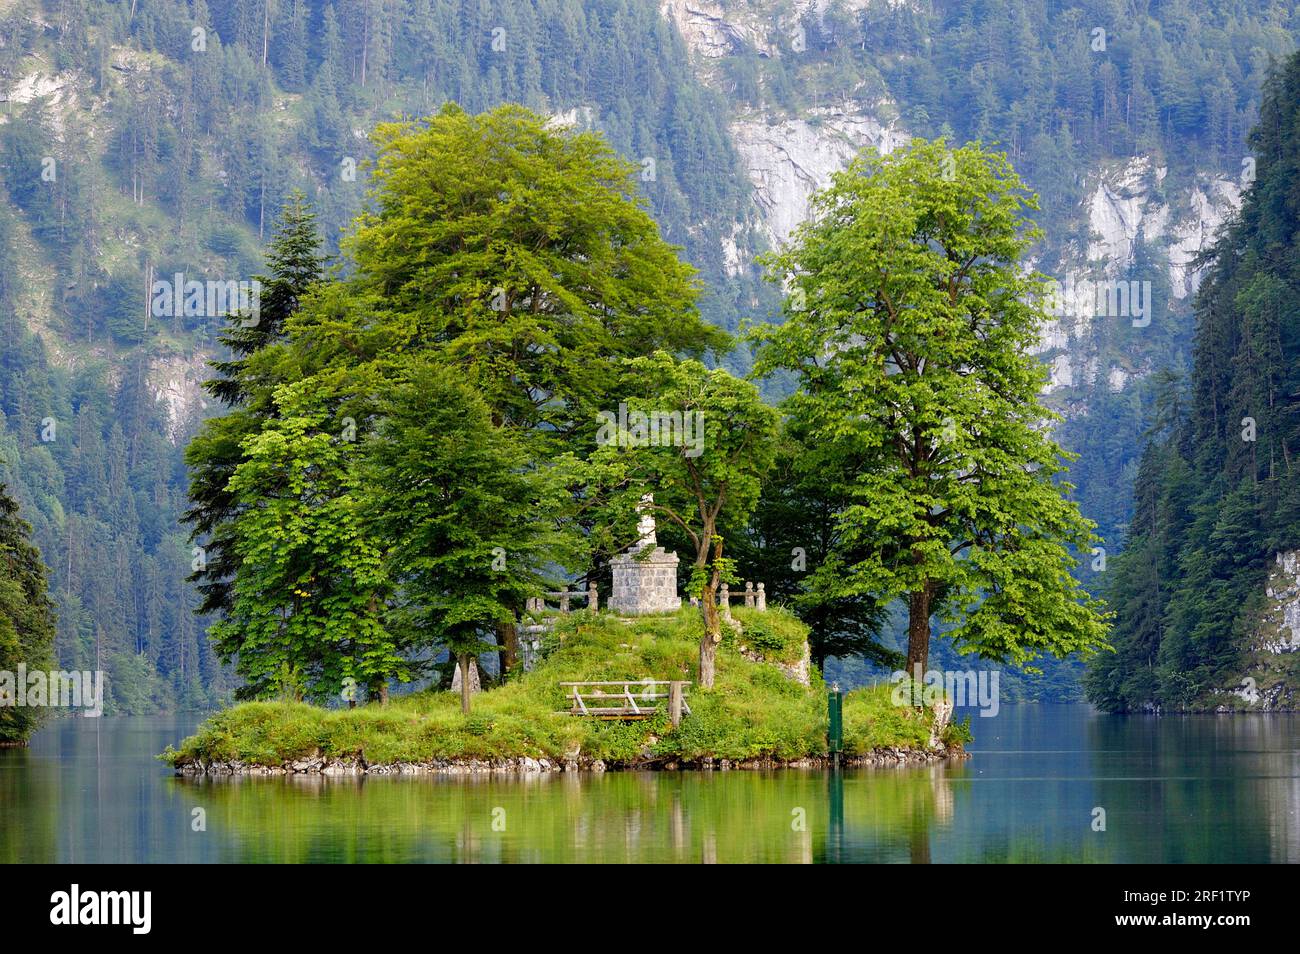 Christlieger Island with Nepomuk statue, Koenigssee, Berchtesgaden National Park, Bavaria, Germany Stock Photo